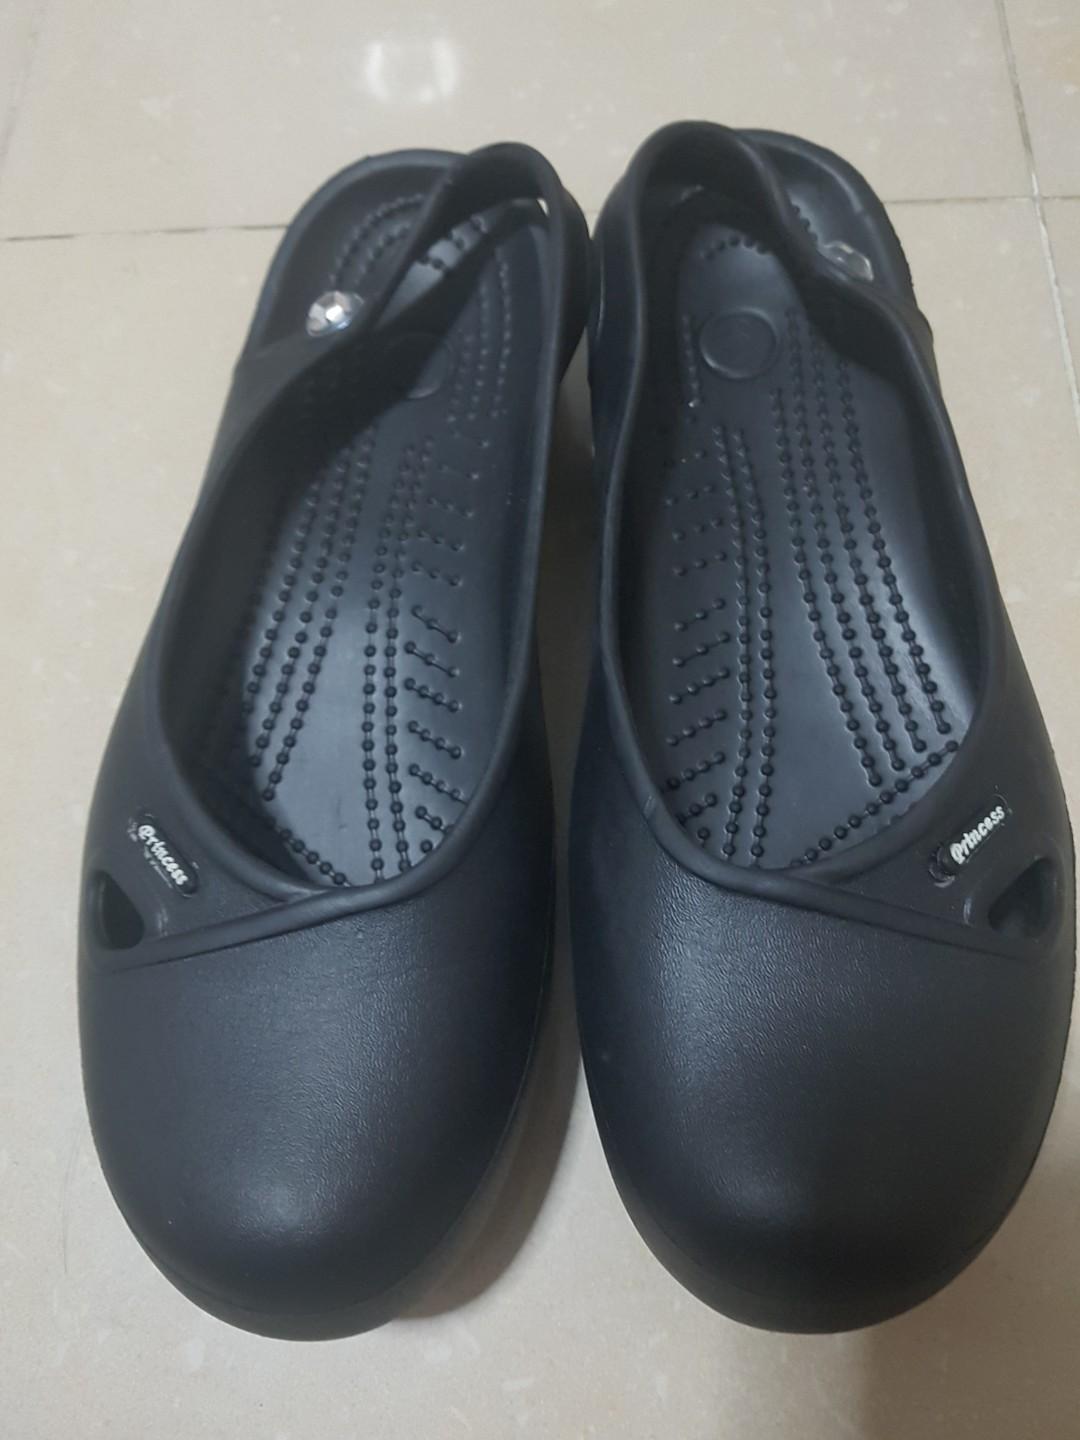 crocs that look like shoes